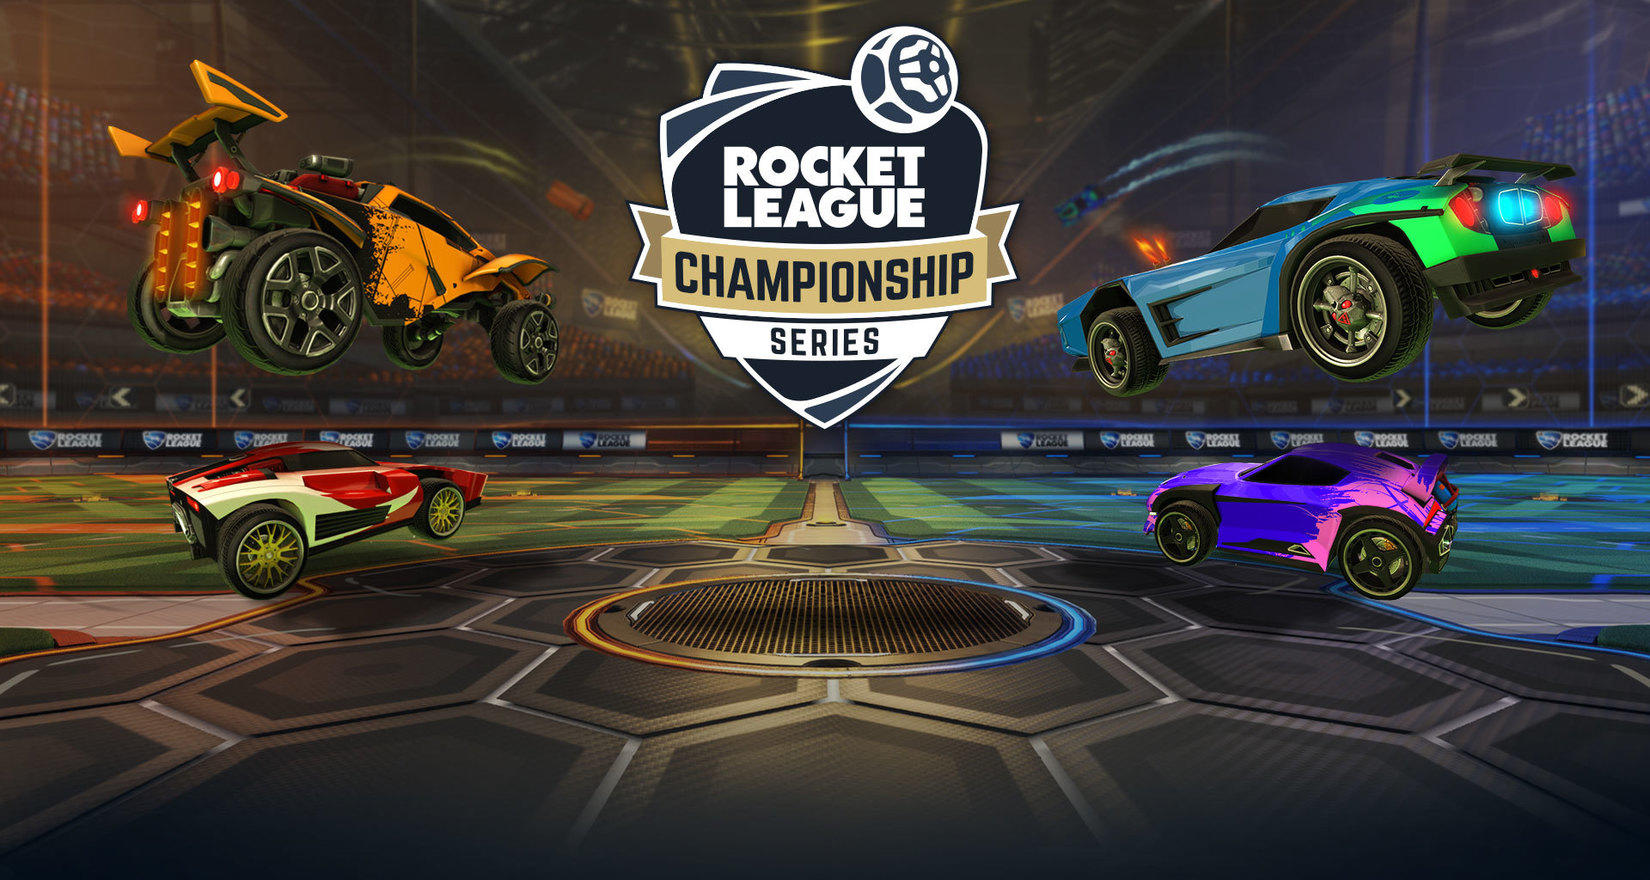 Rocket League’s race to become a Tier 1 esport, Nexus Gaming LLC